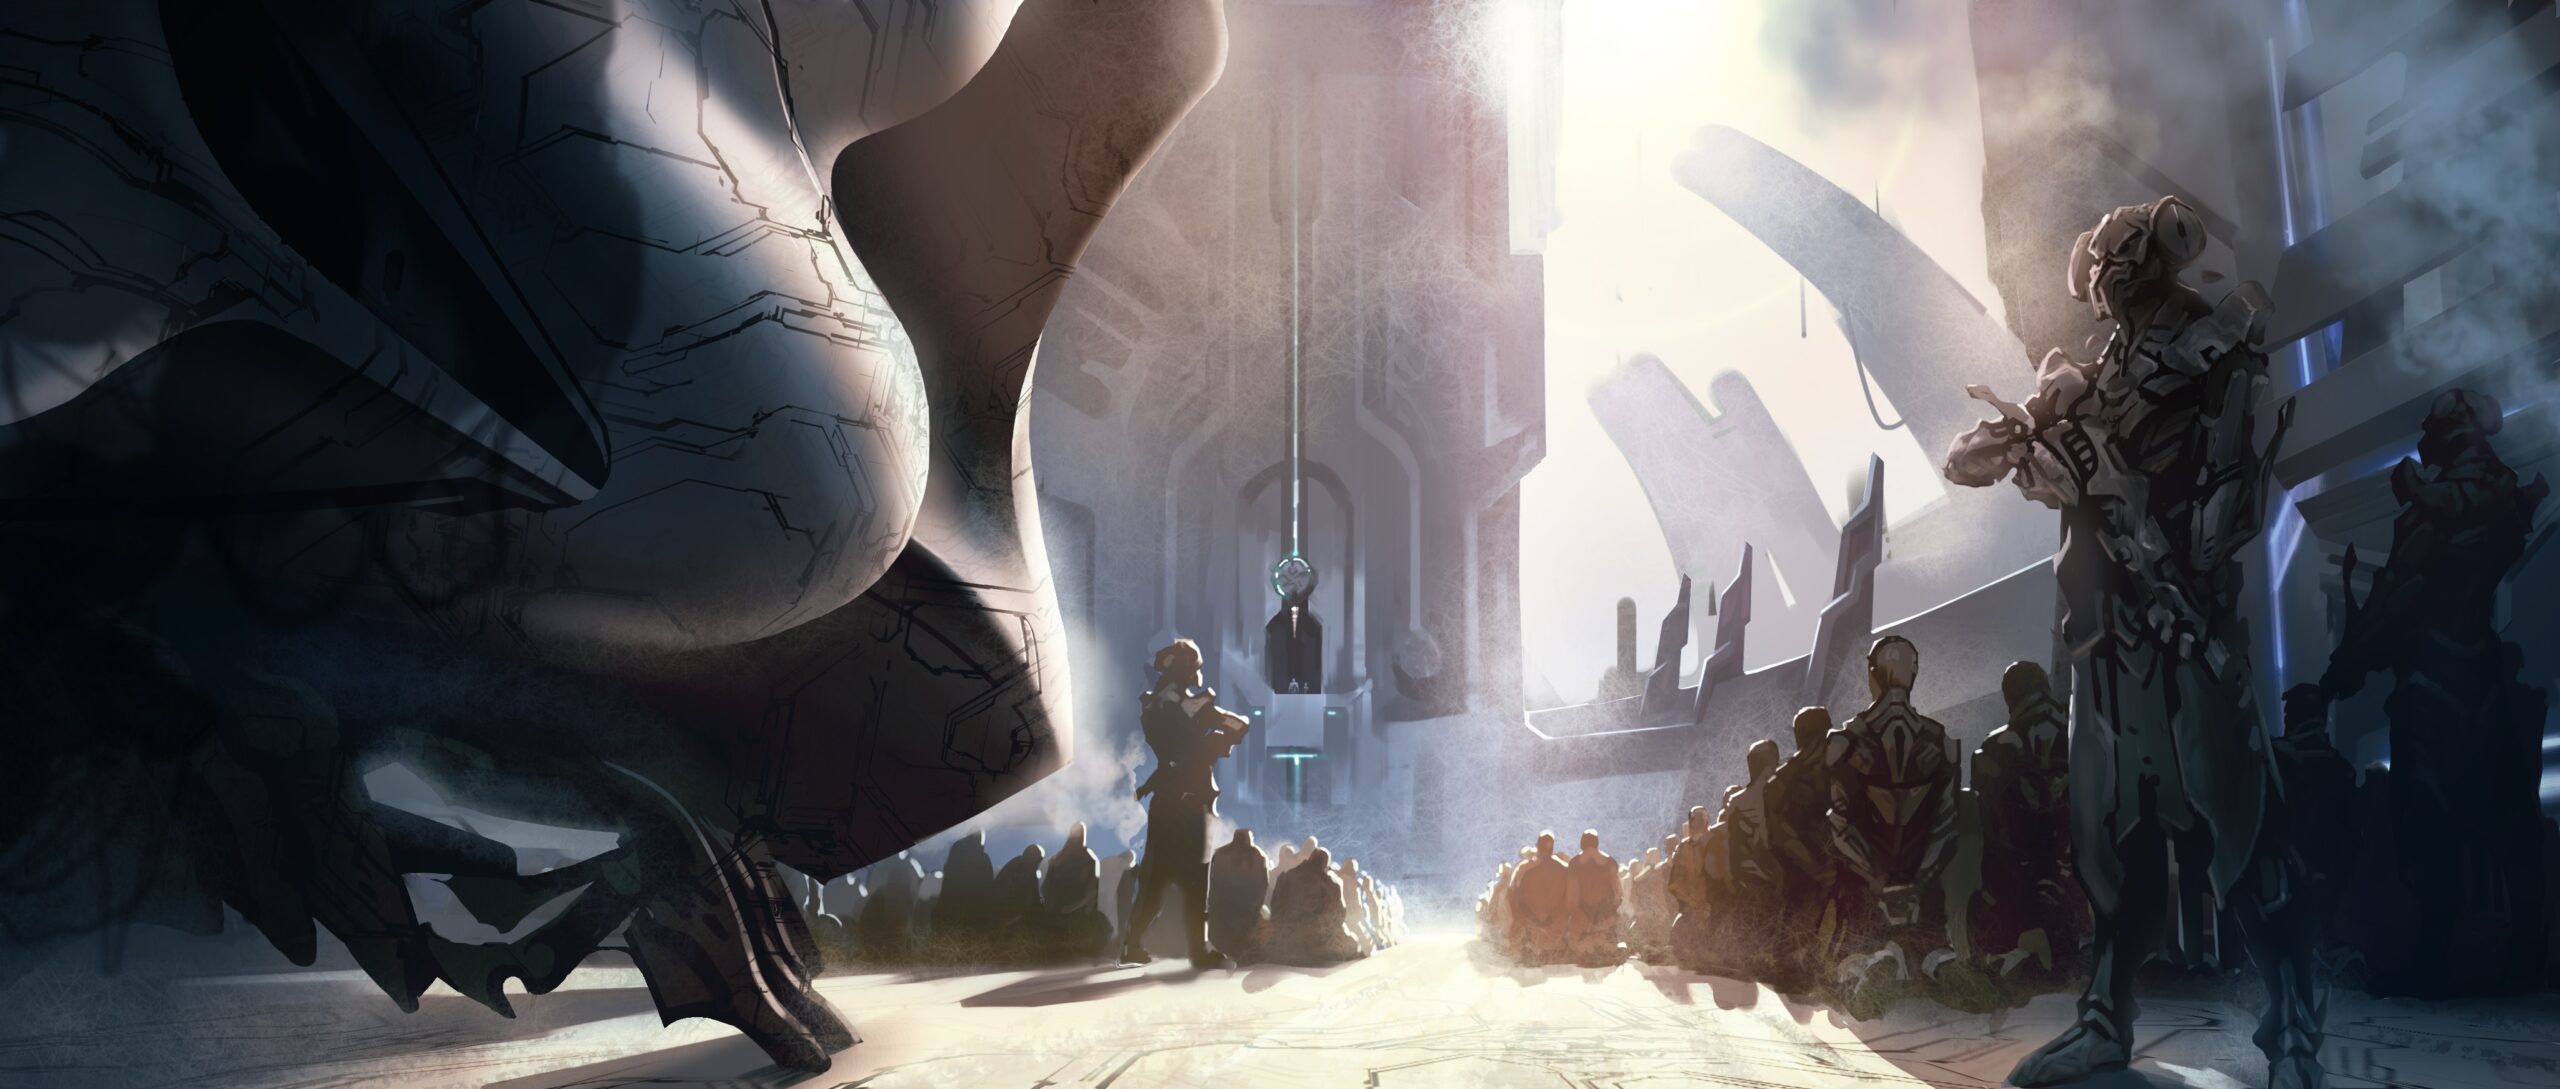 Halo 4 concept art of Warrior-Servants guarding the defeated Ancestors